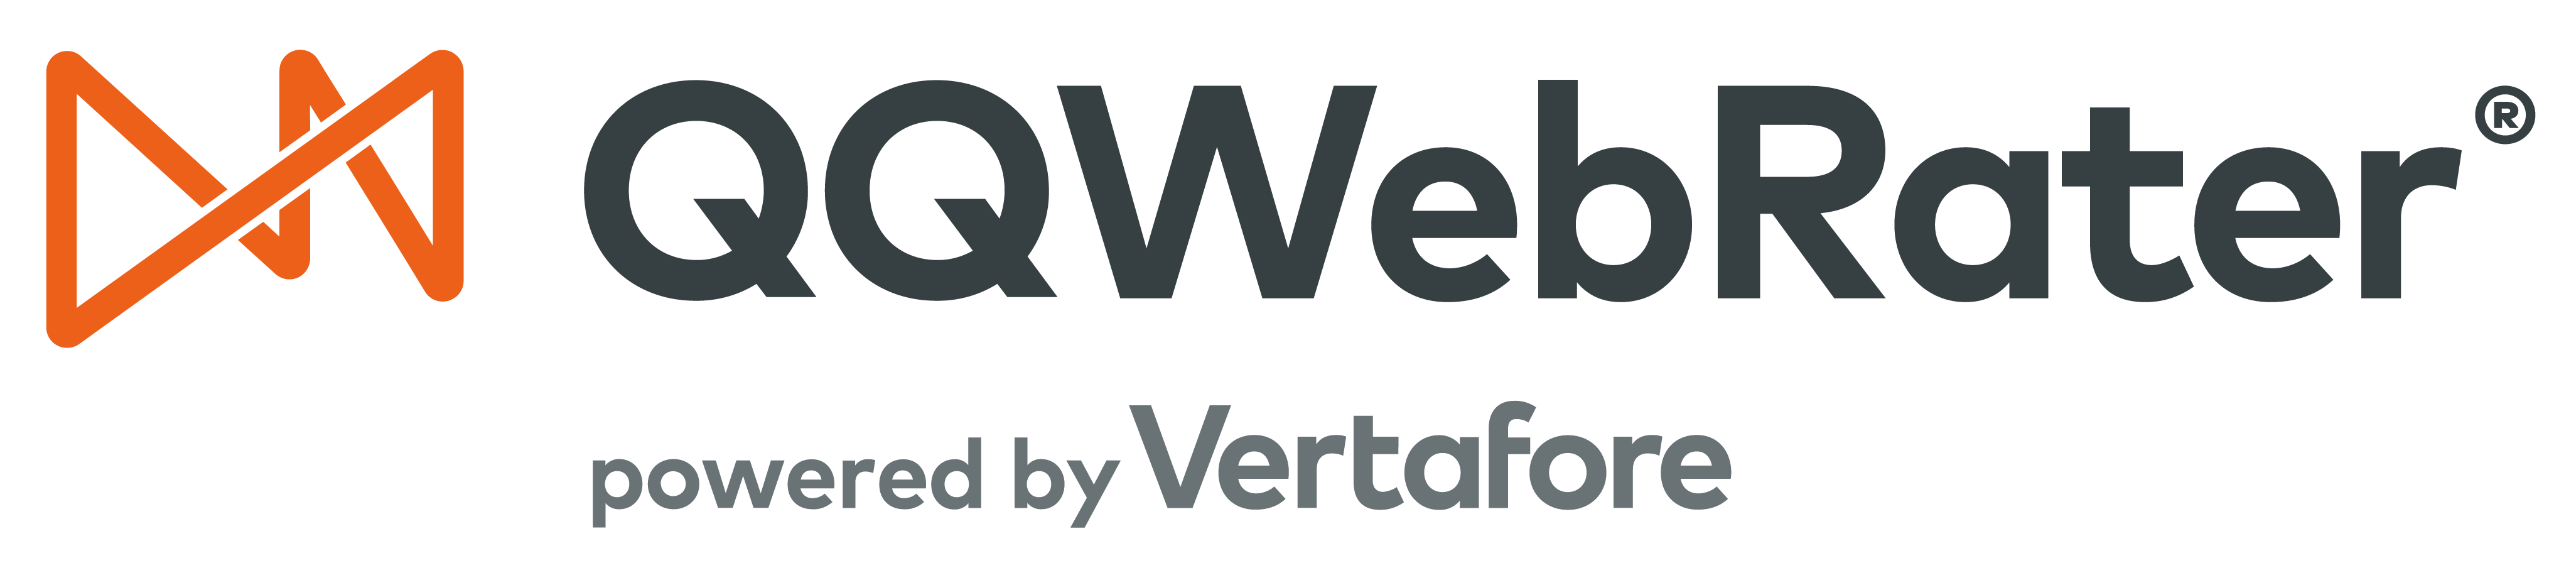 QQ Catalyst Logo - QQWebRater | Vertafore